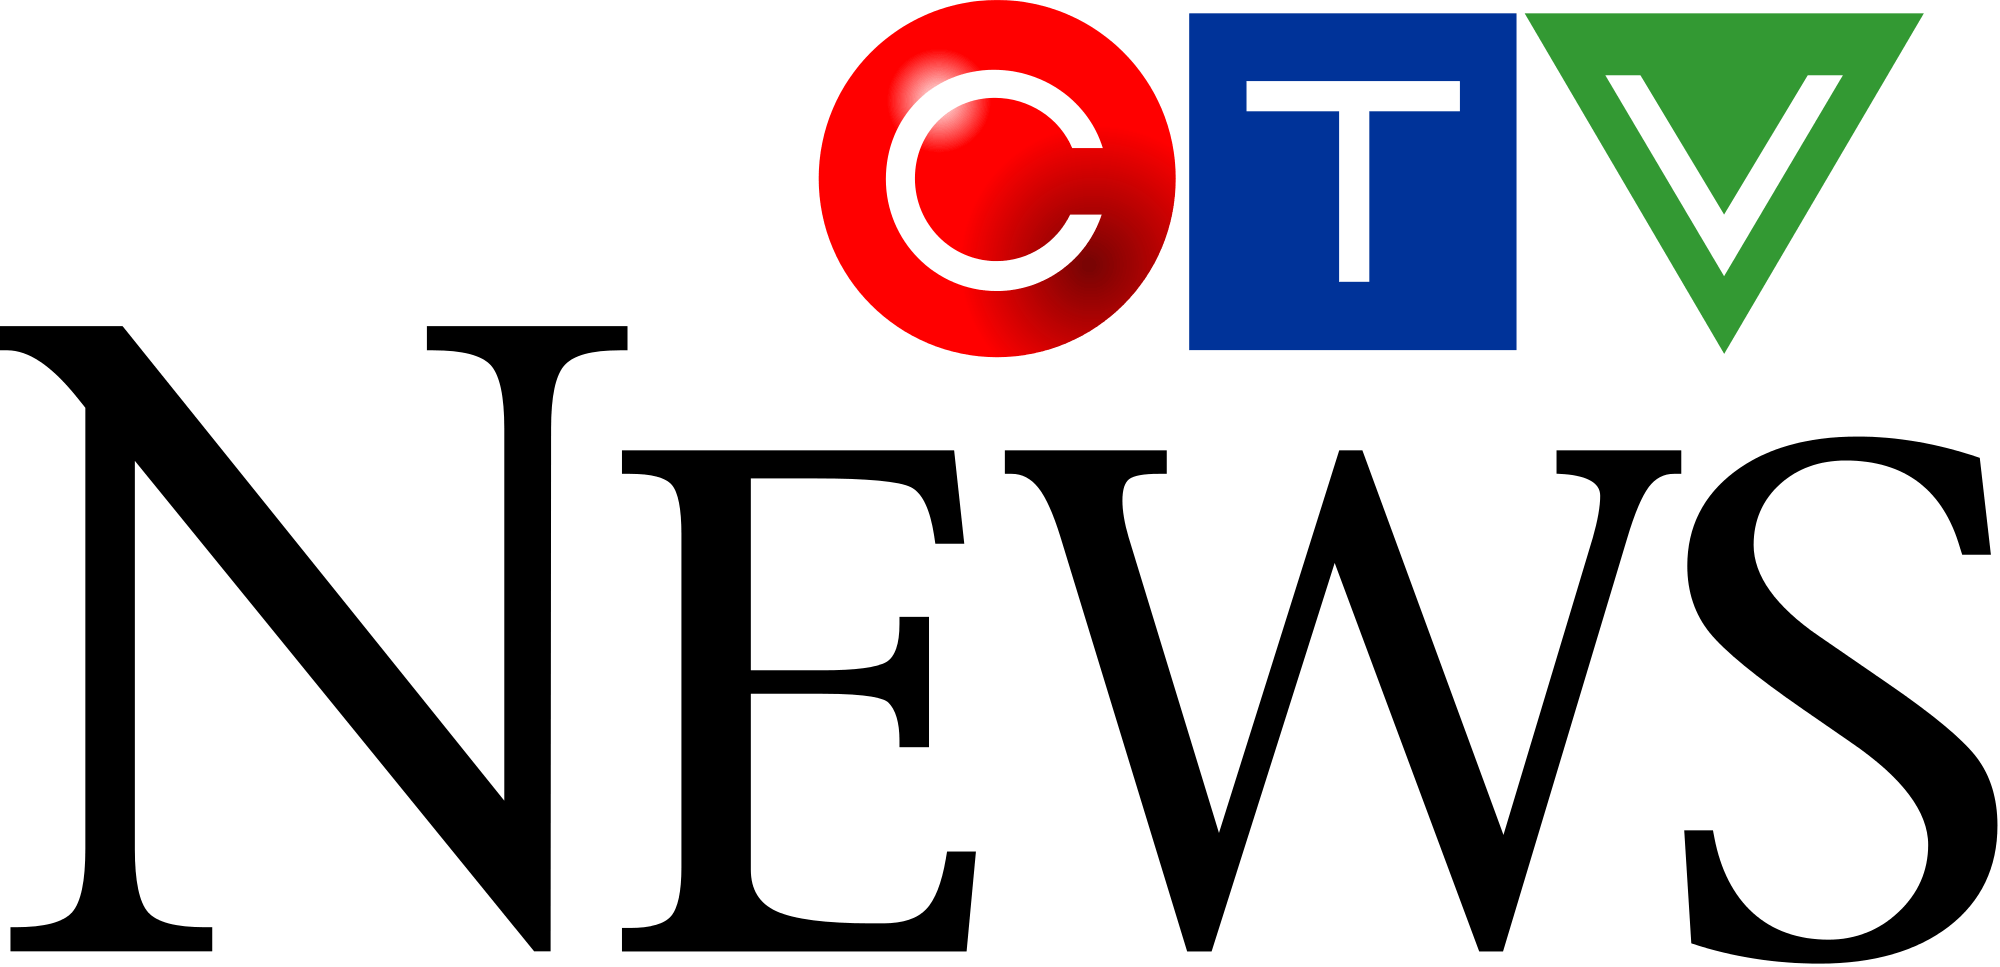 CTV Logo - CTV News.svg